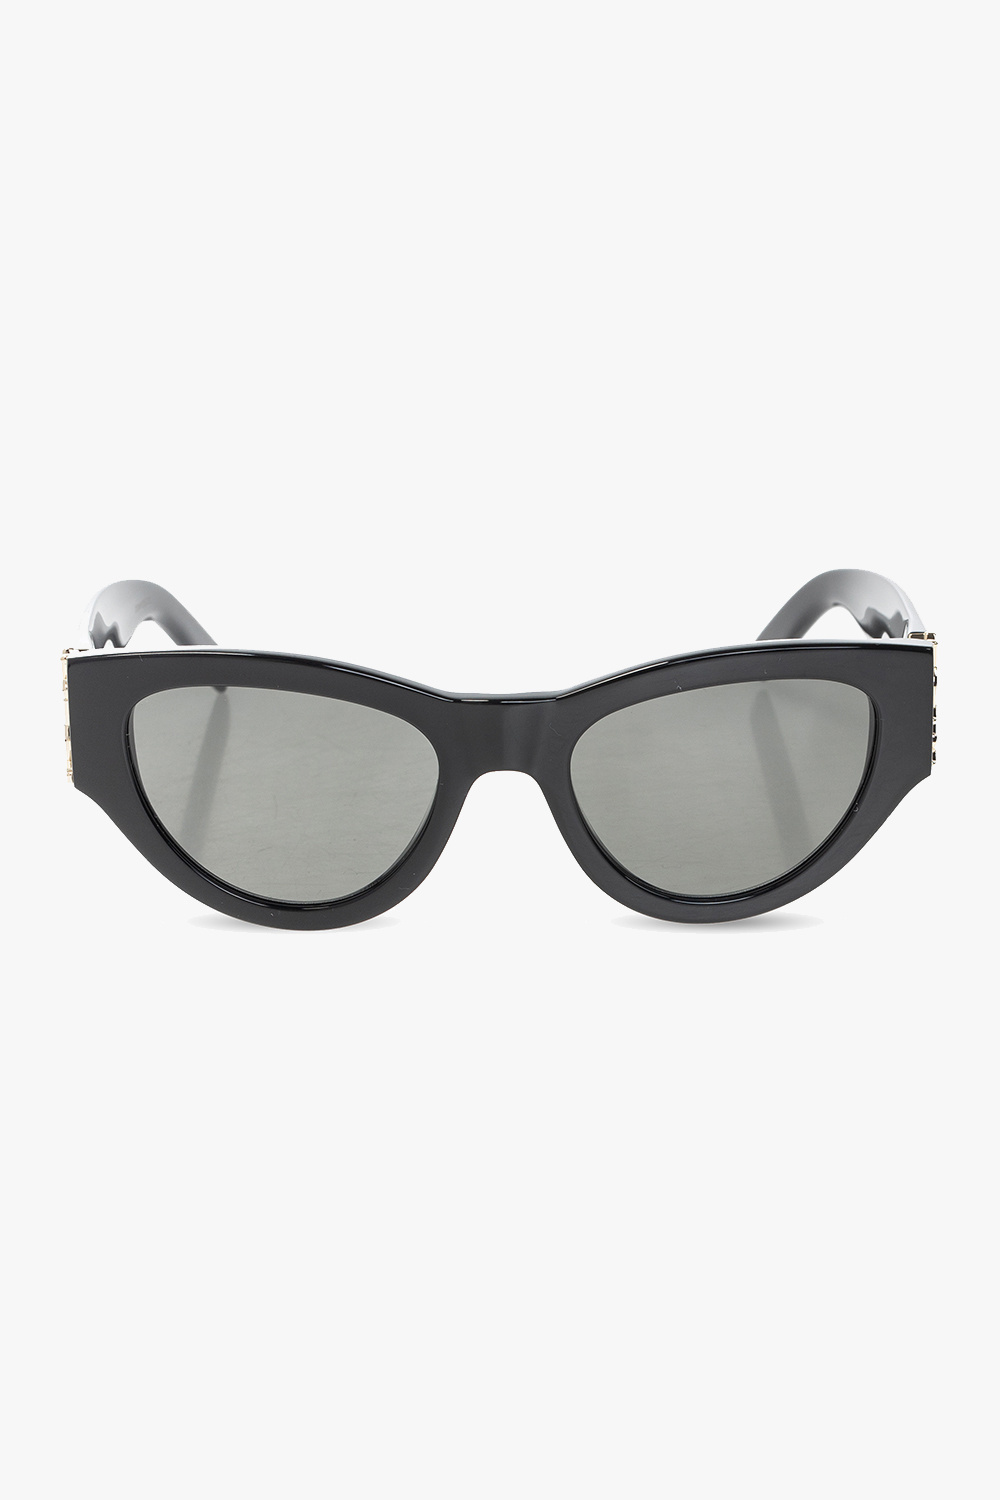 Yves Saint Laurent SL M94 001 53 20 Sunglasses